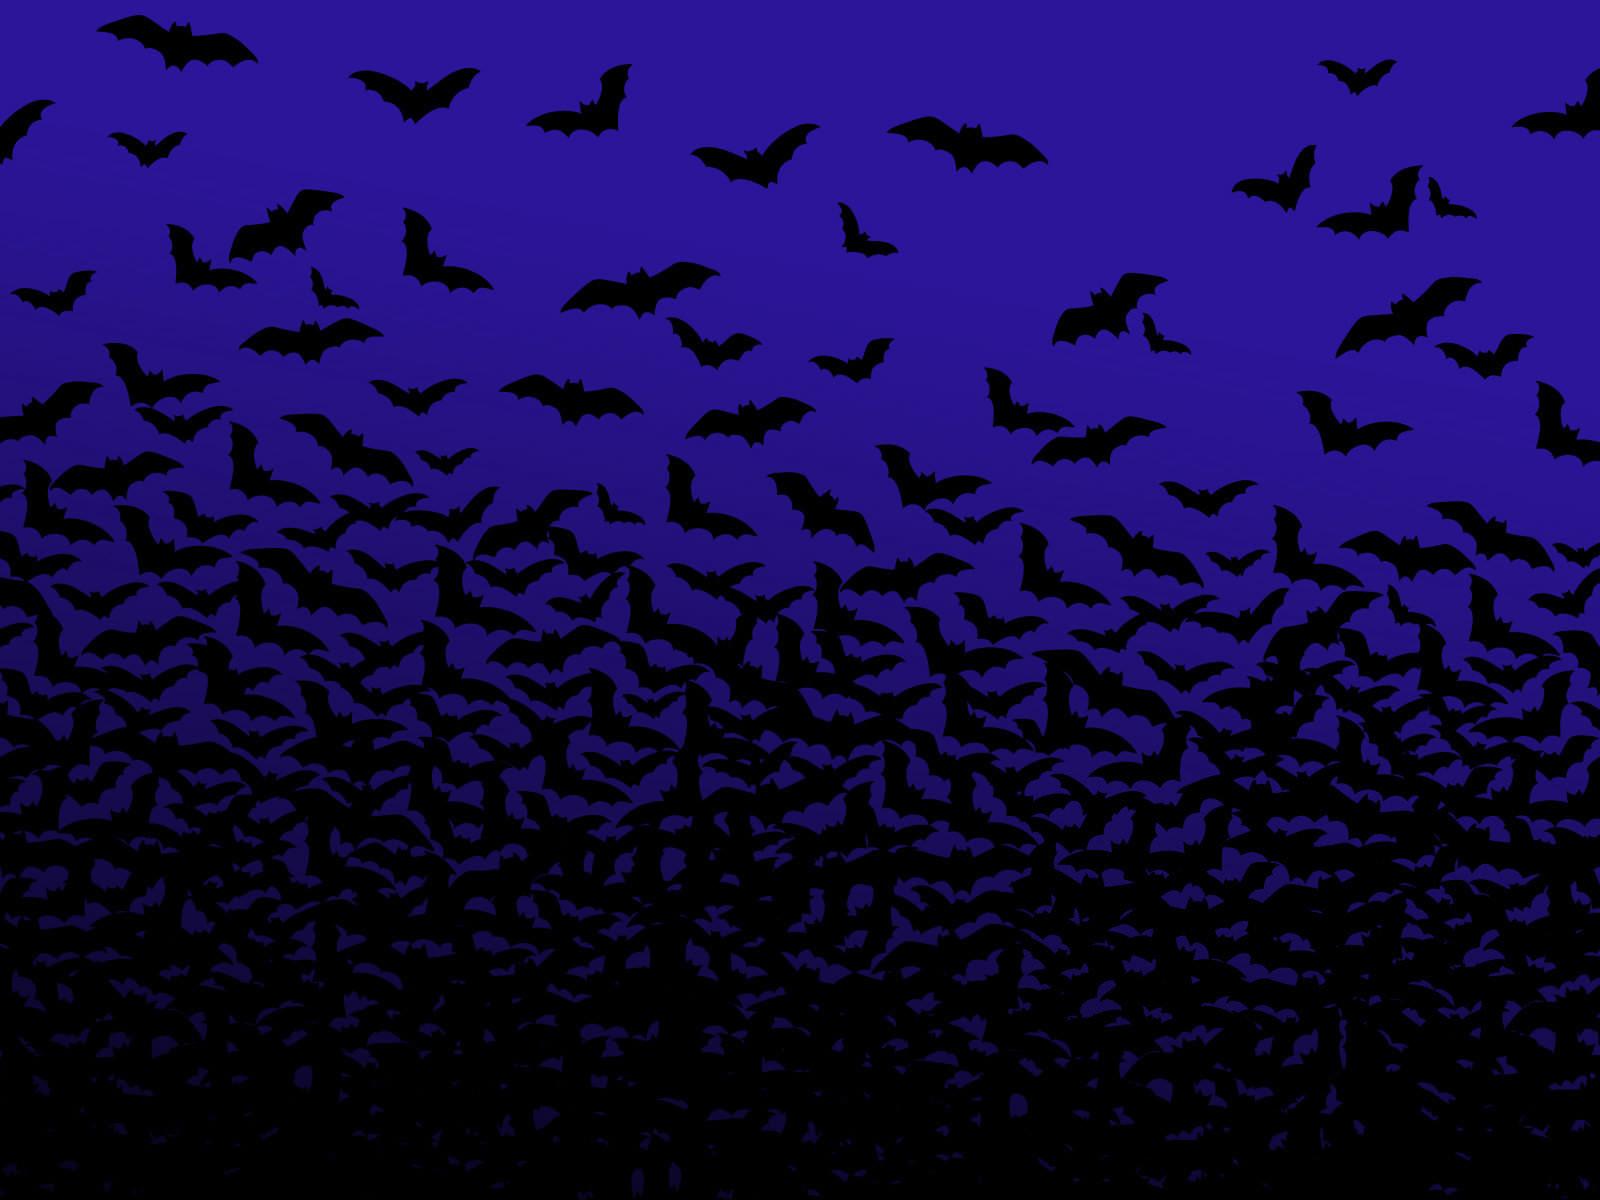 Bat wallpaper HD for desktop background